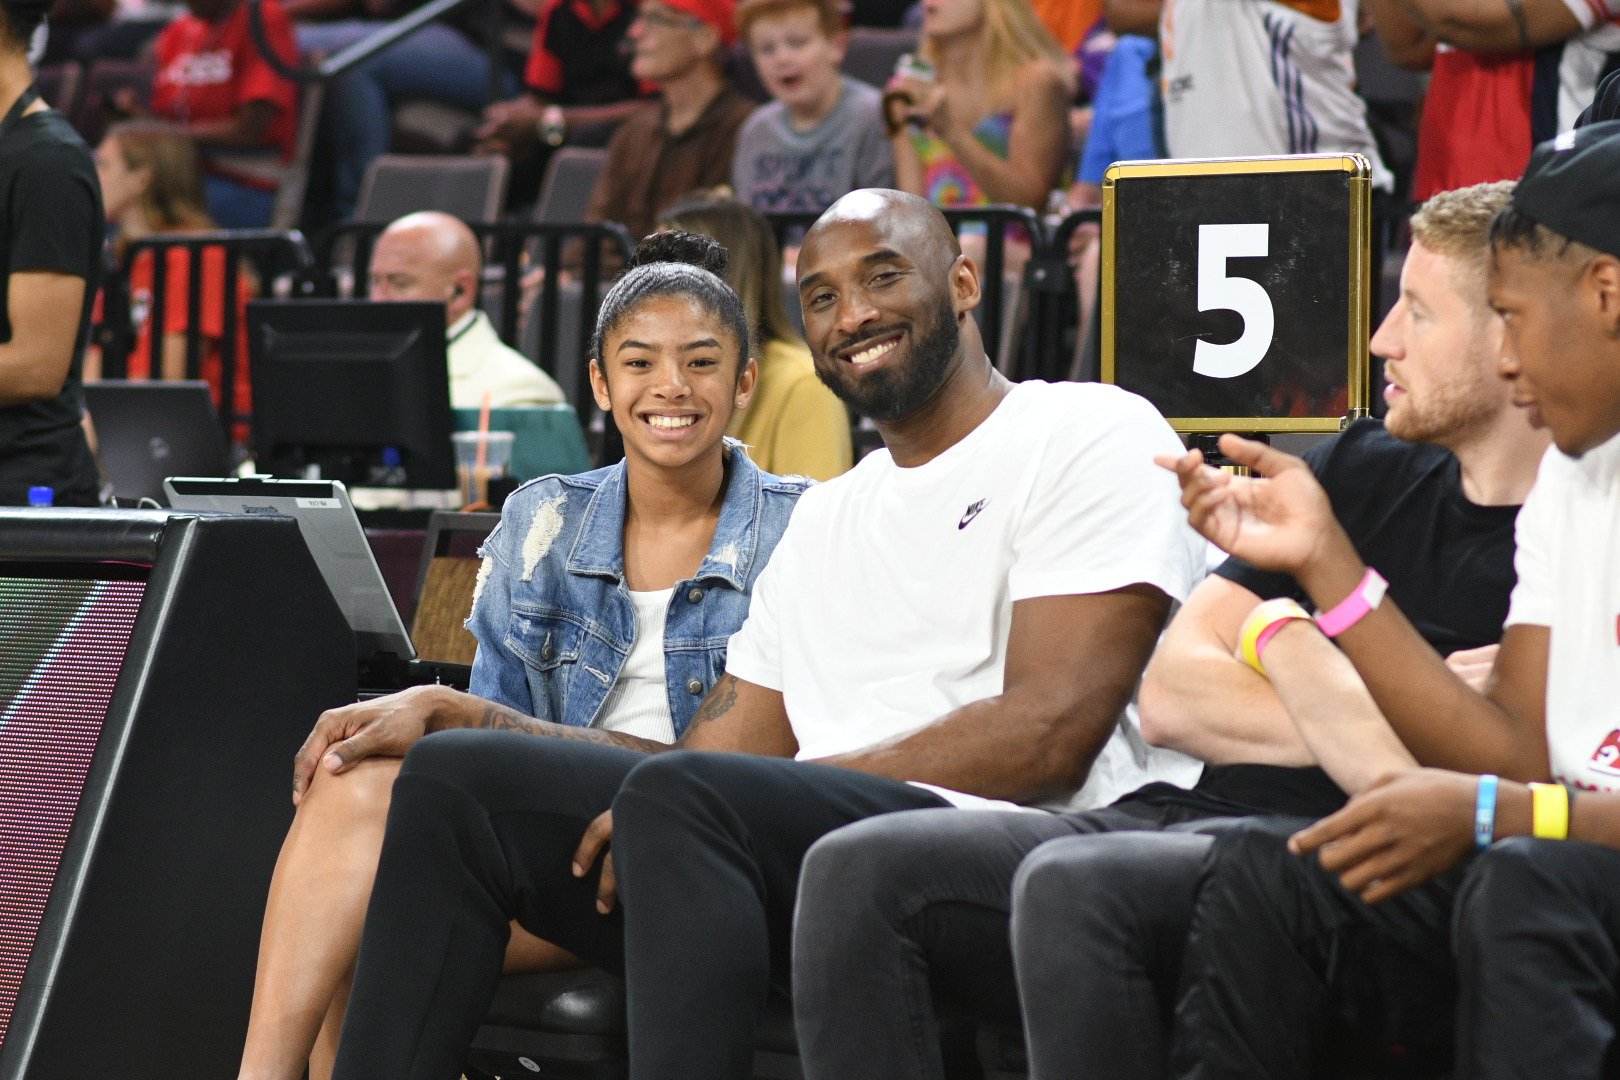 Los Angeles Kings honor Kobe Bryant, crash victims at Staples